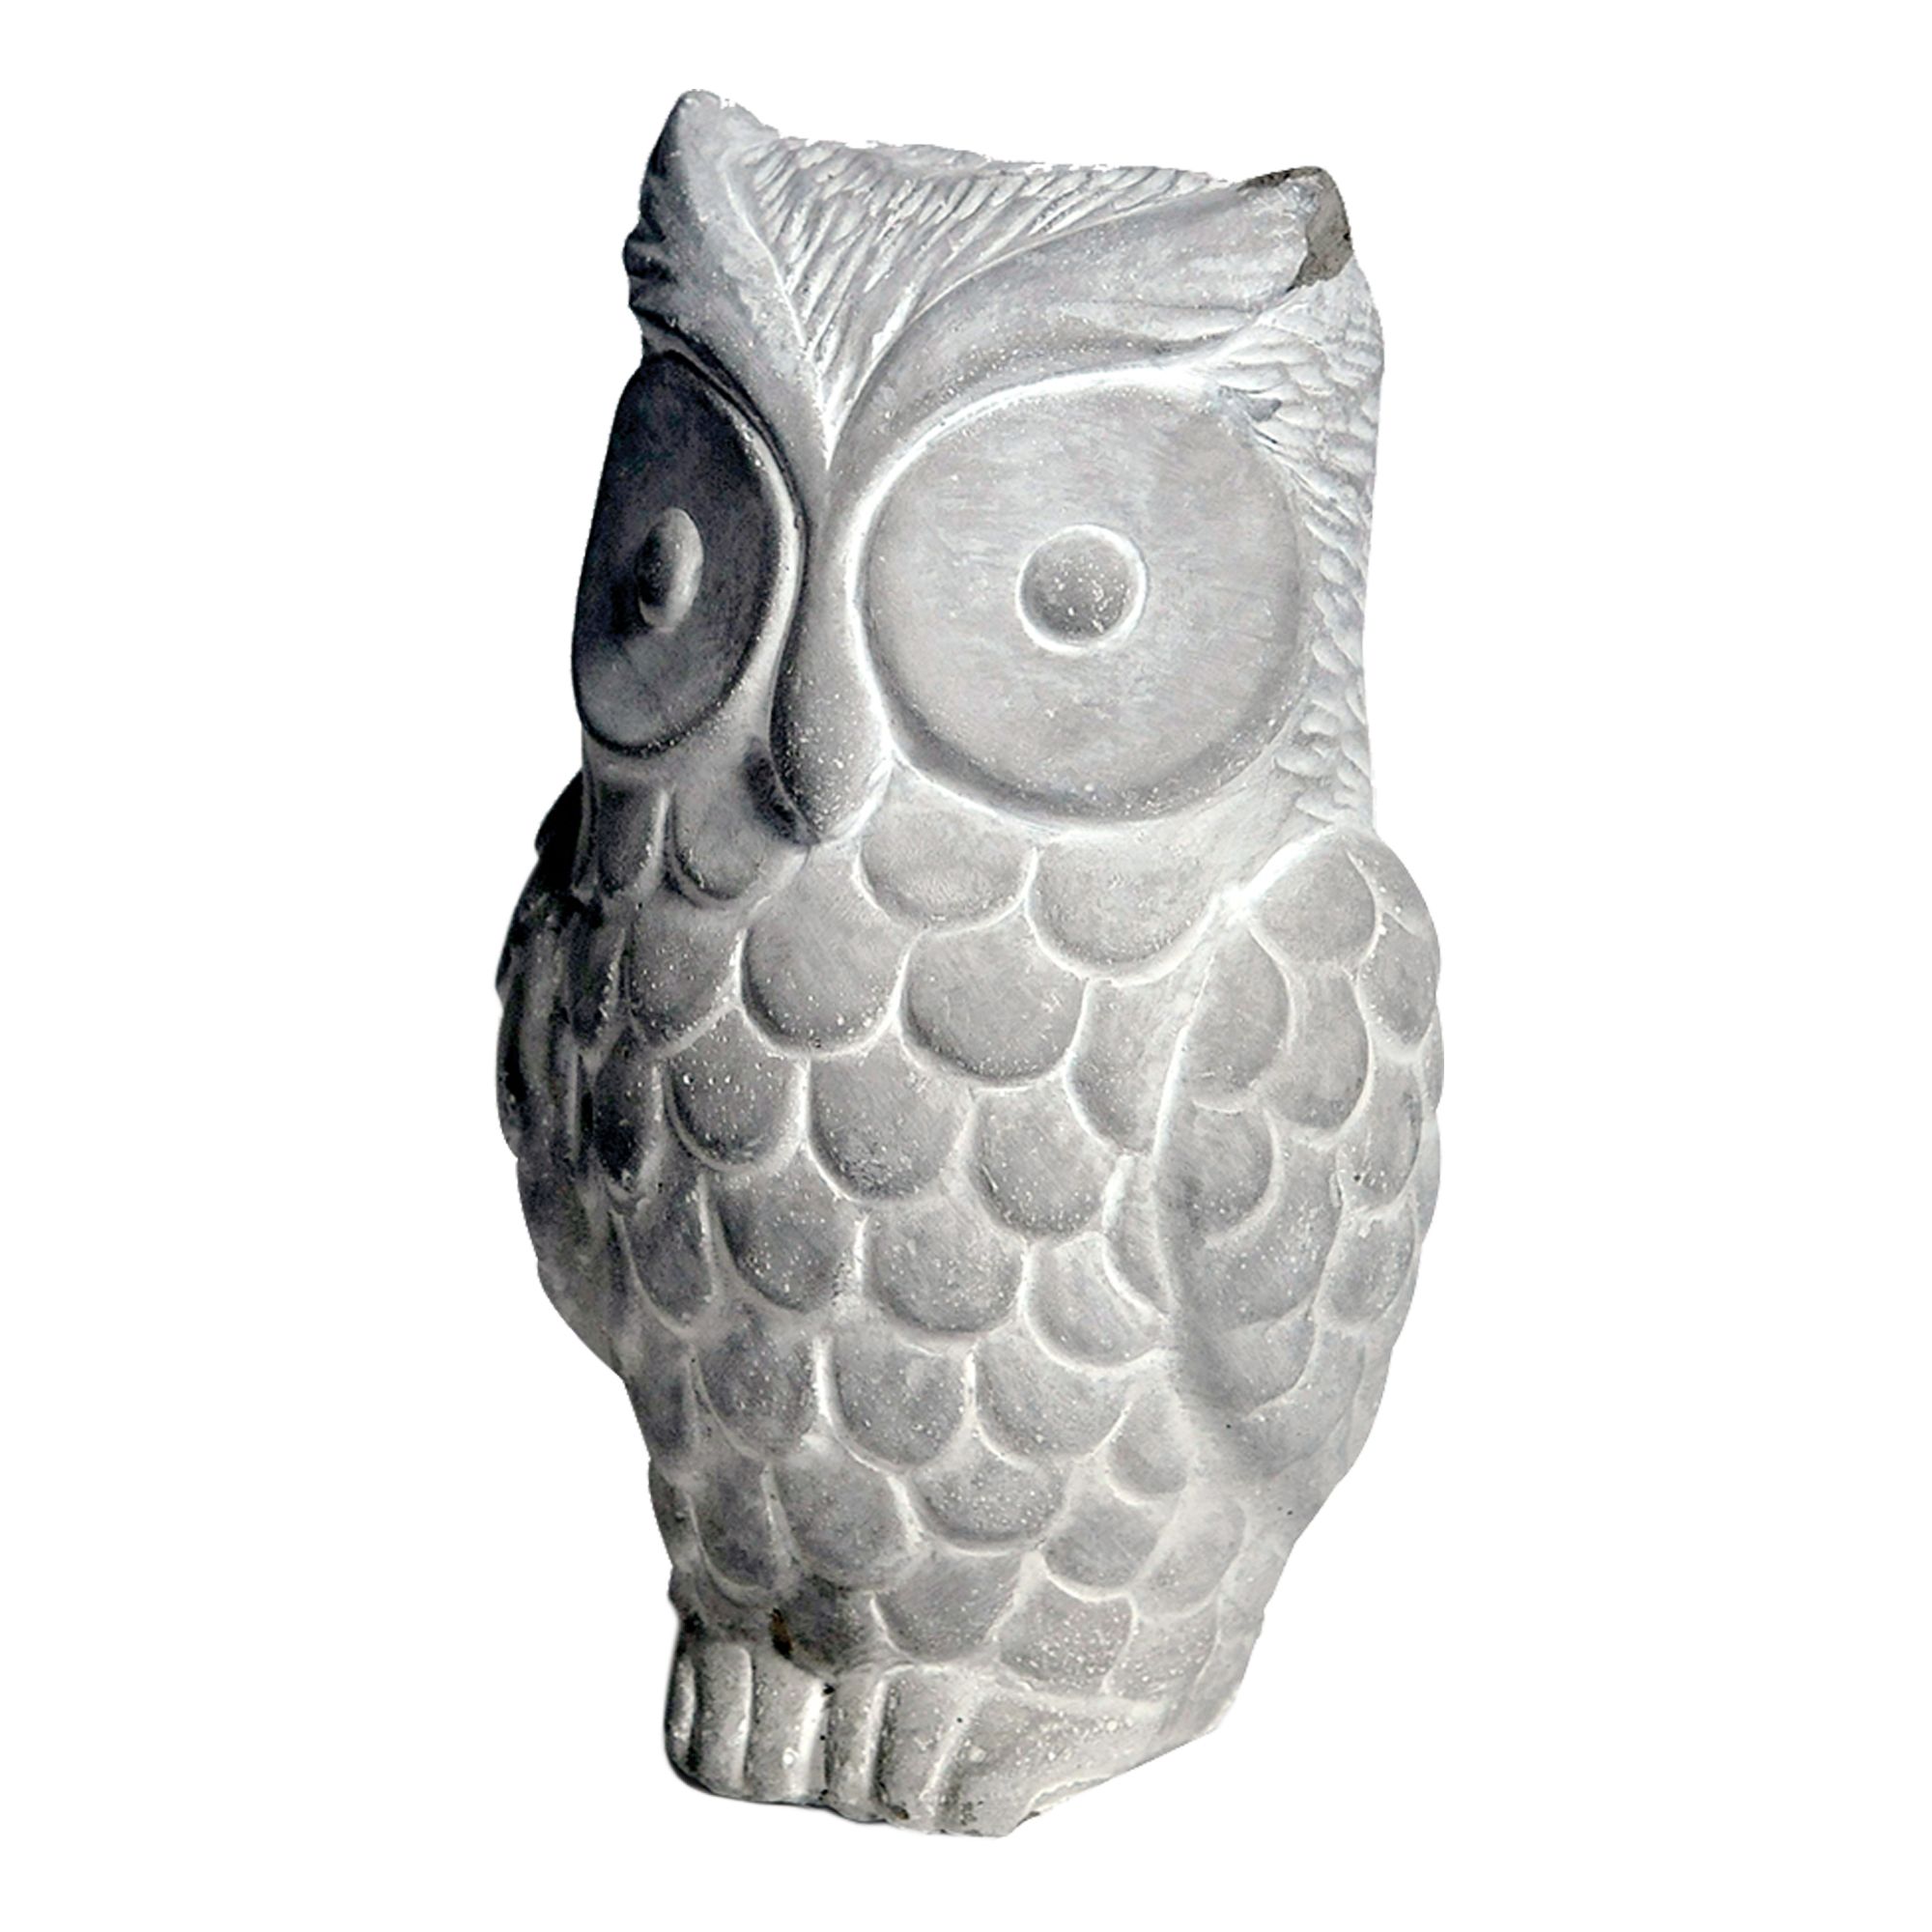 Big owl Garden ornament